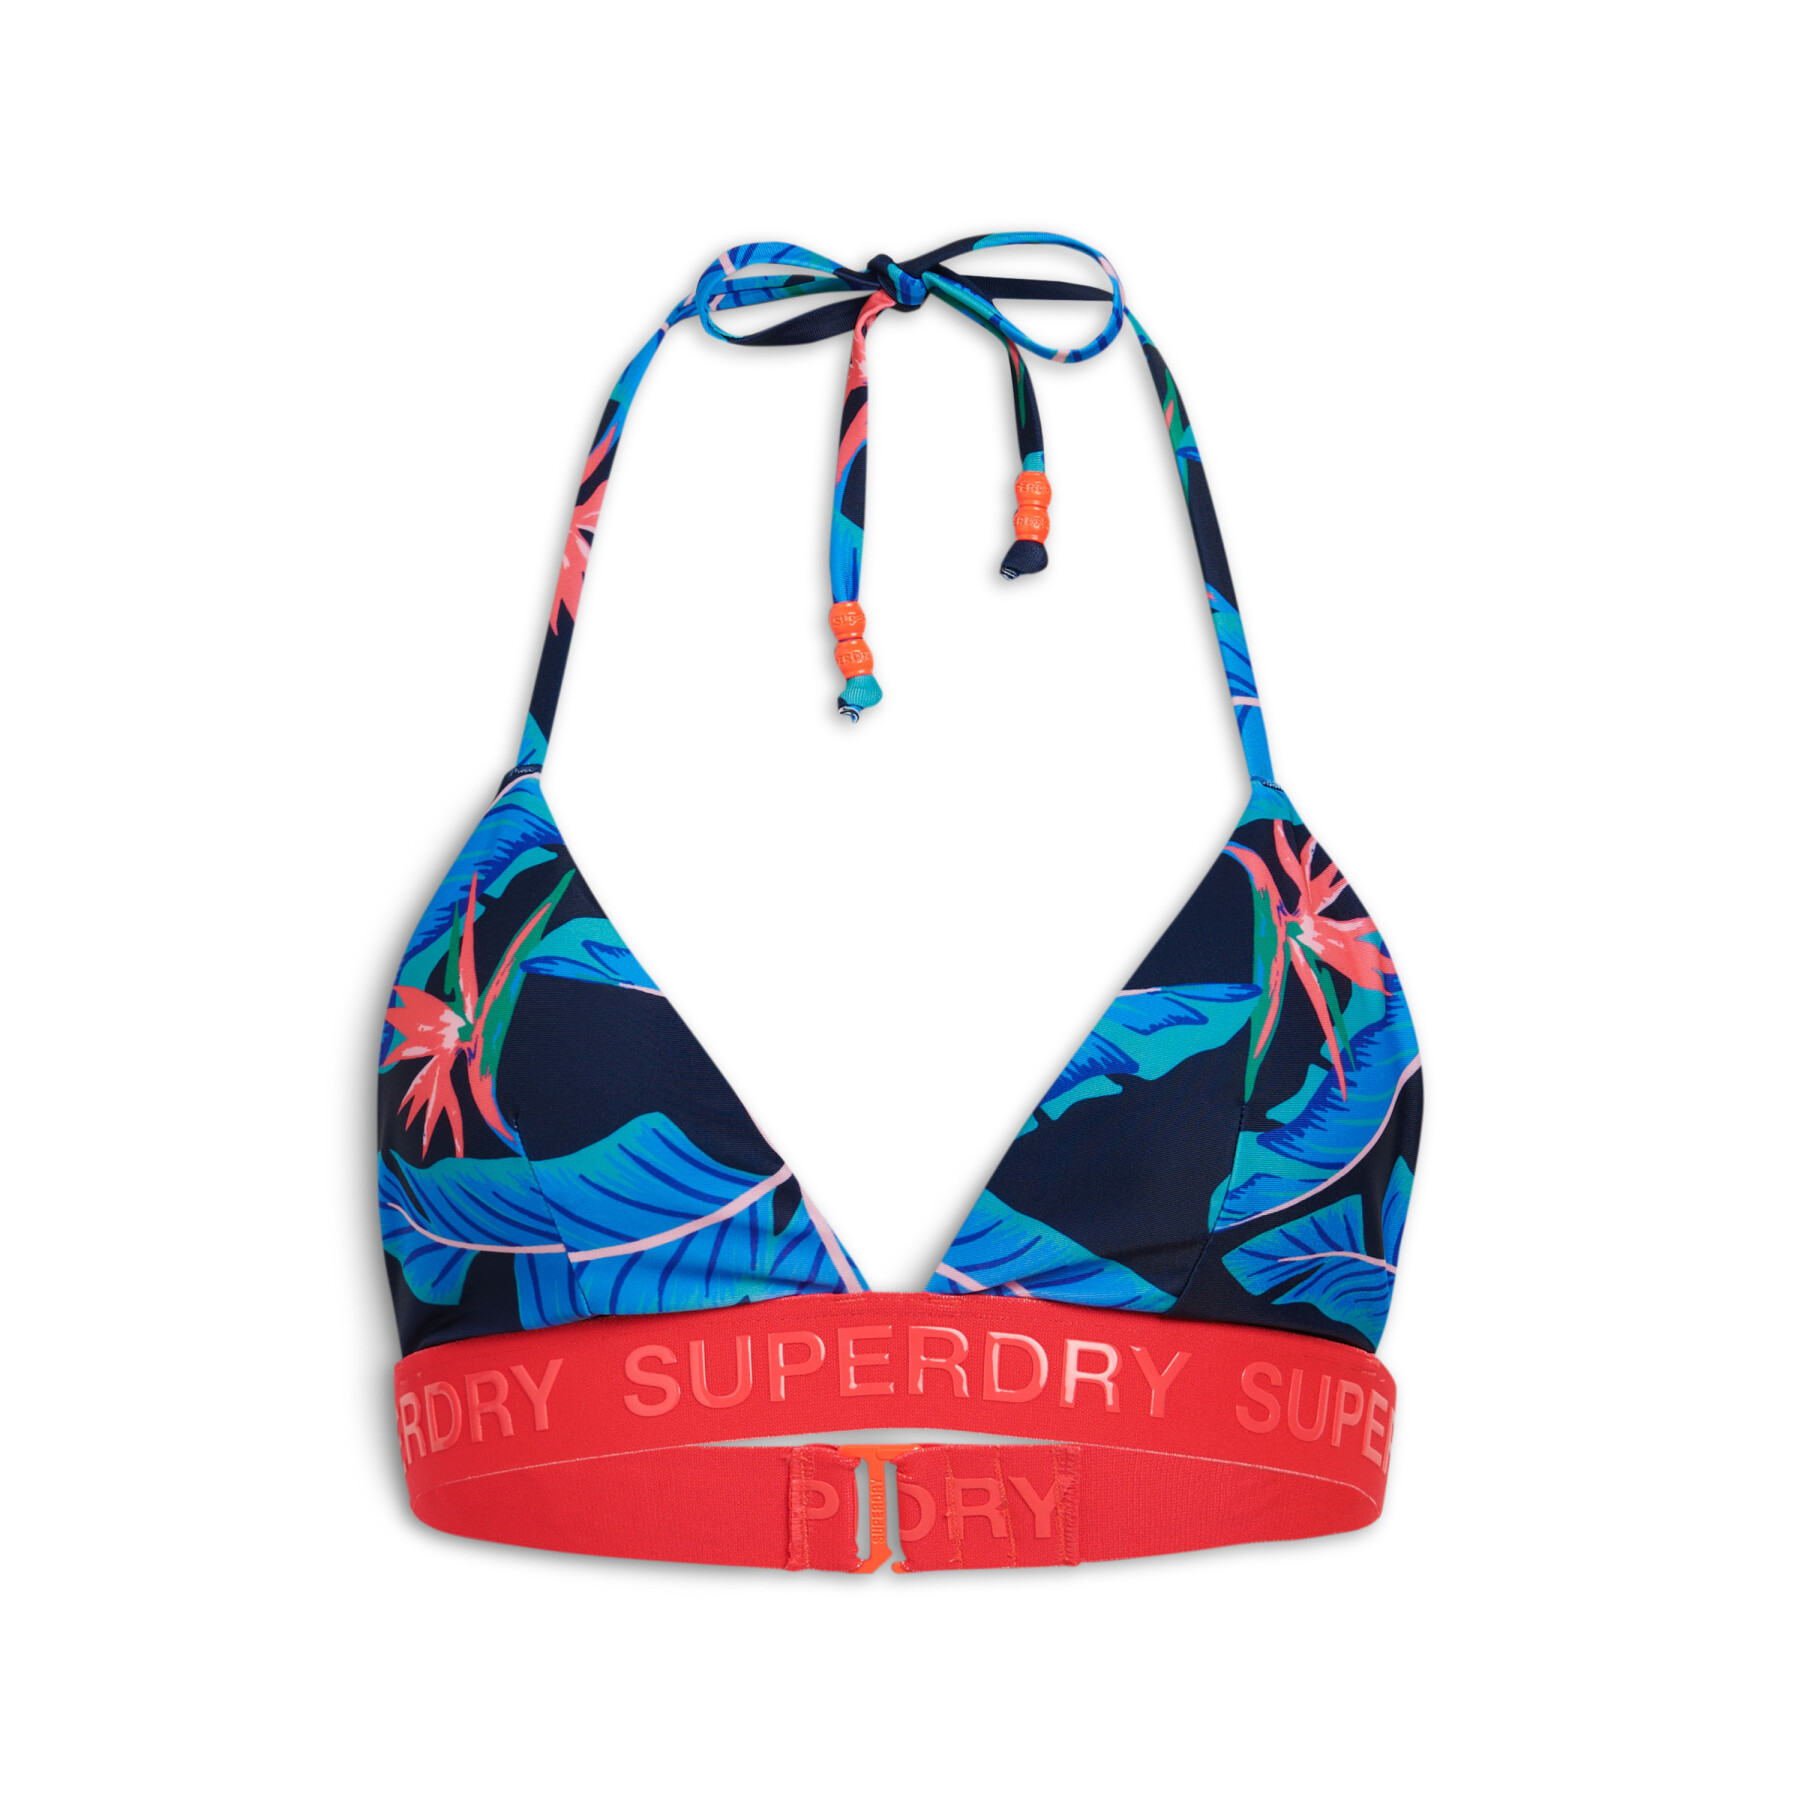 Women's swimsuit top Superdry